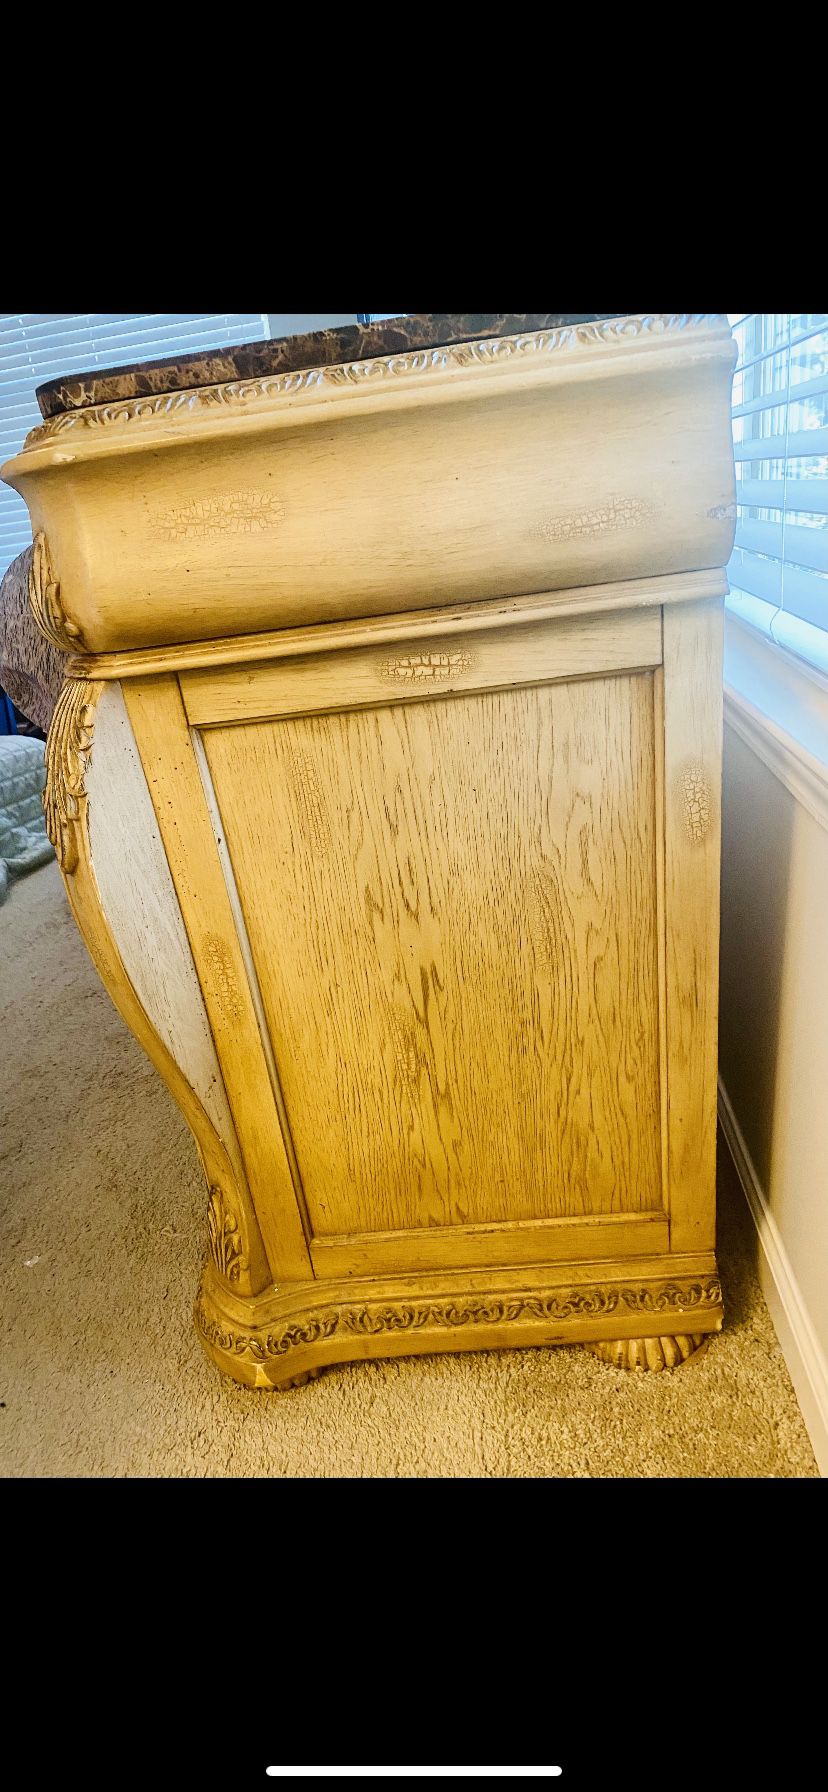 Elegant Antique 12 Drawer Dresser for sale in Raleigh.